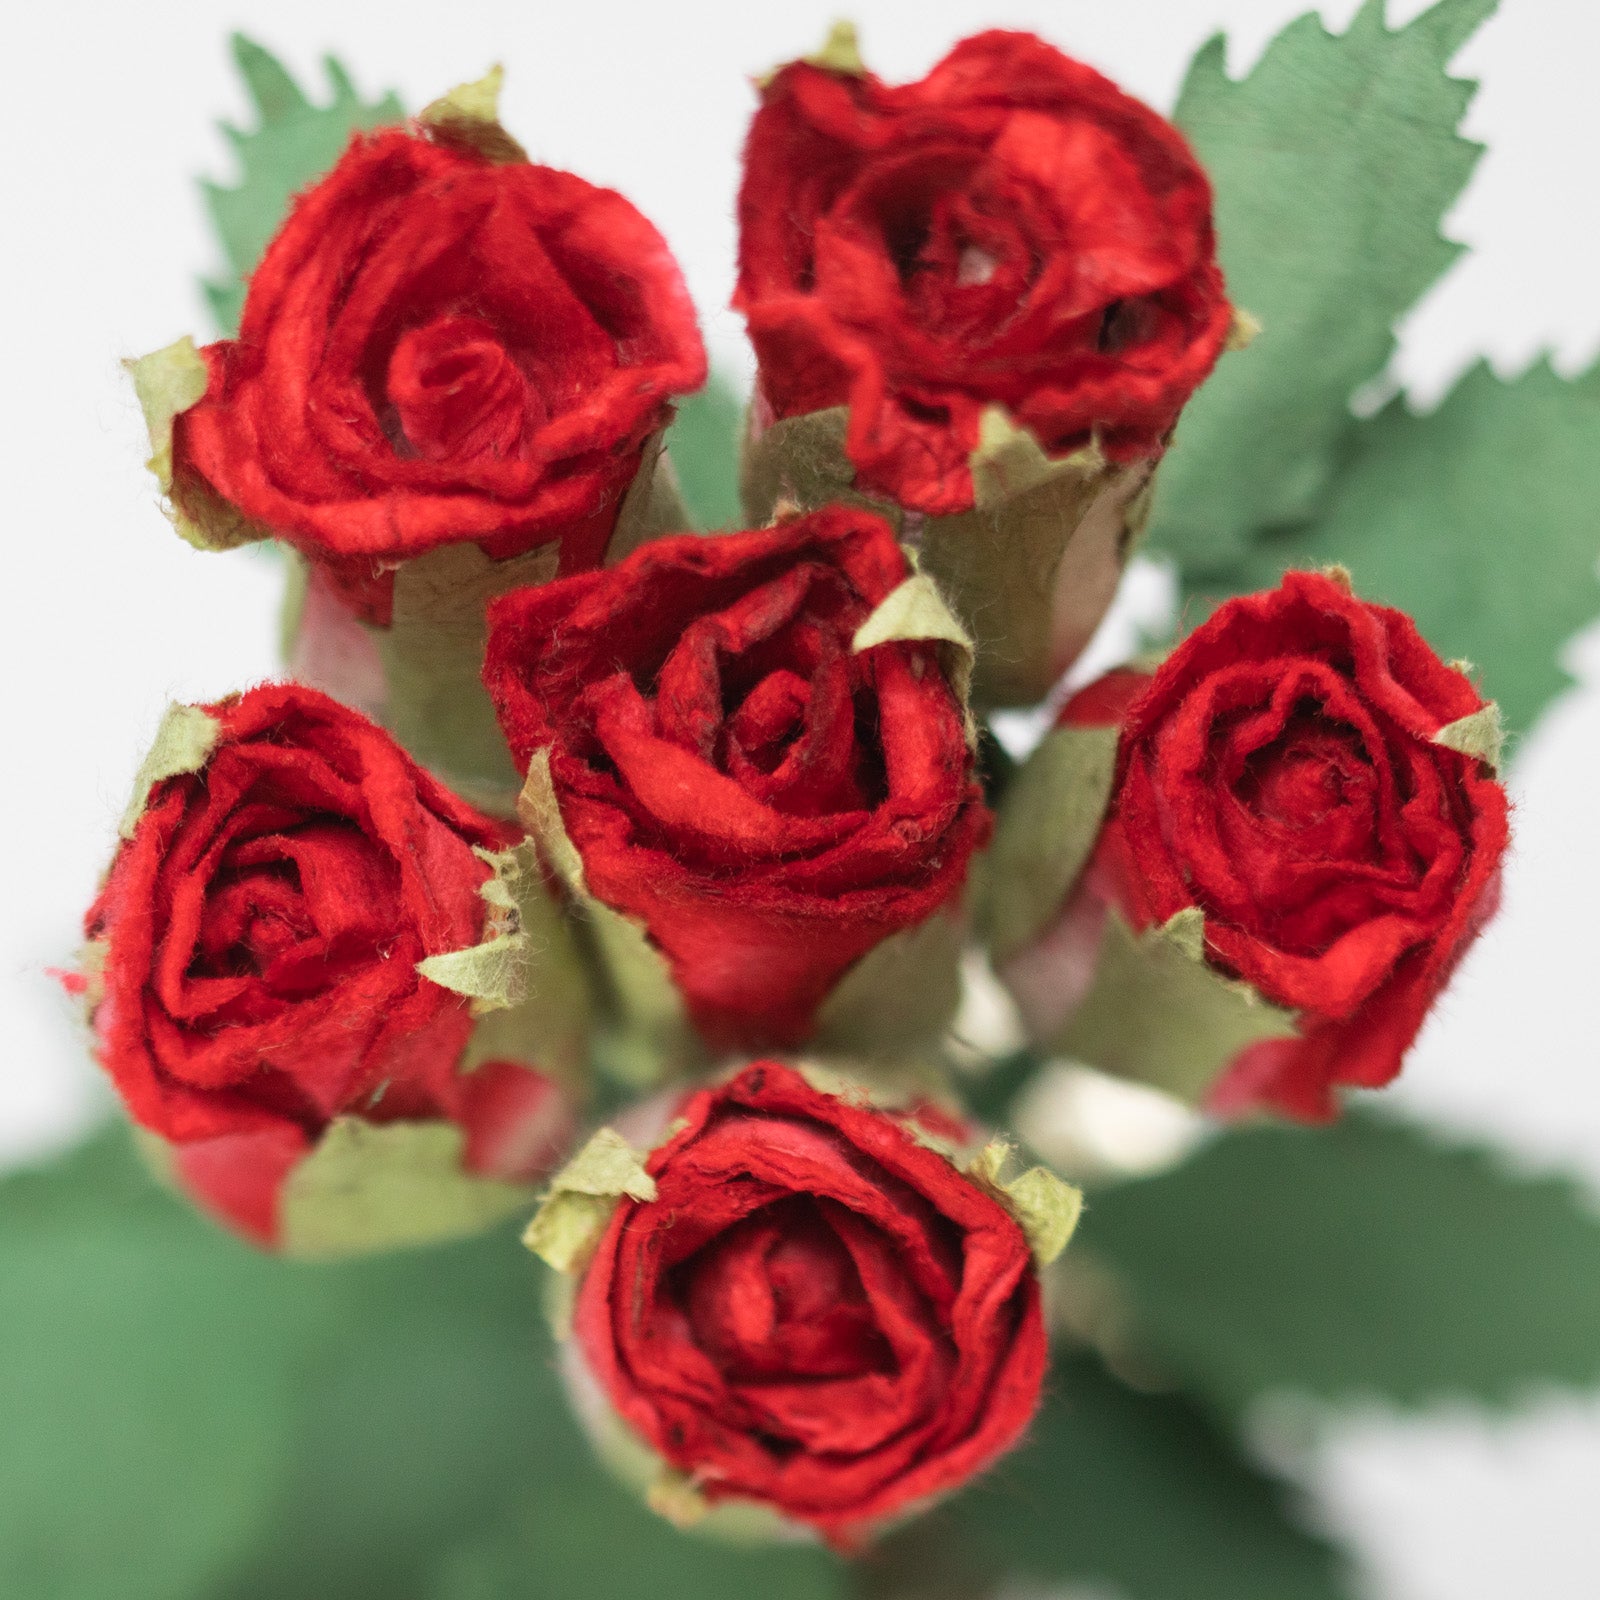 Rose Bouquet - Dozen of assorted hand made paper flowers